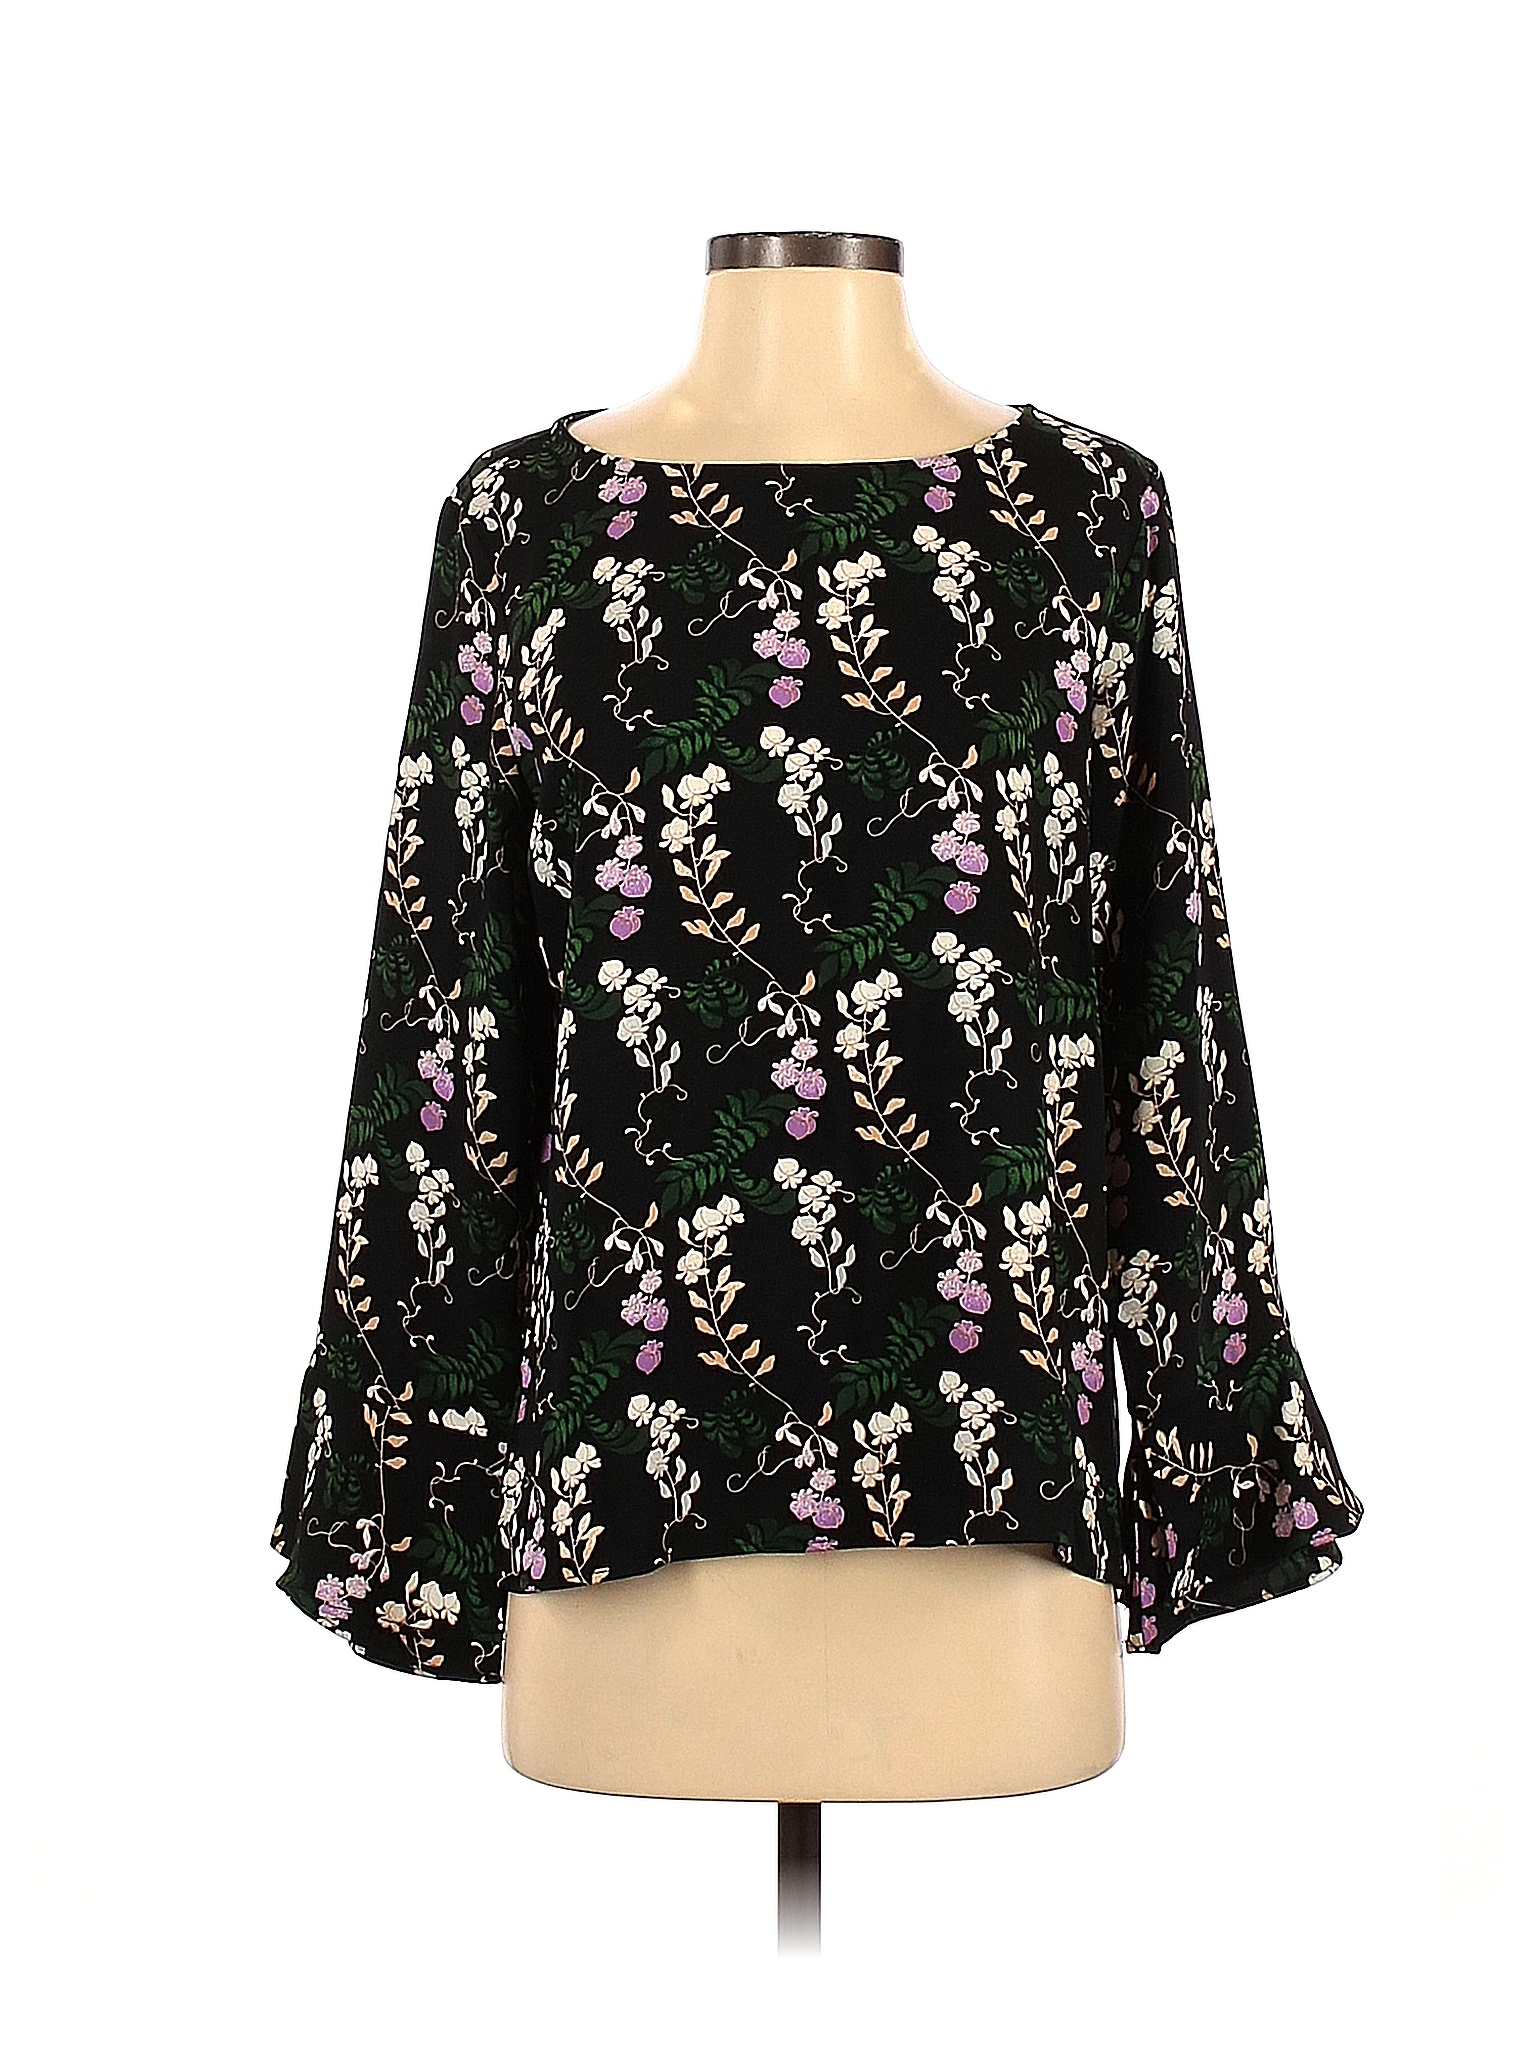 Ann Taylor 100% Polyester Floral Black Long Sleeve Blouse Size XS - 81% ...